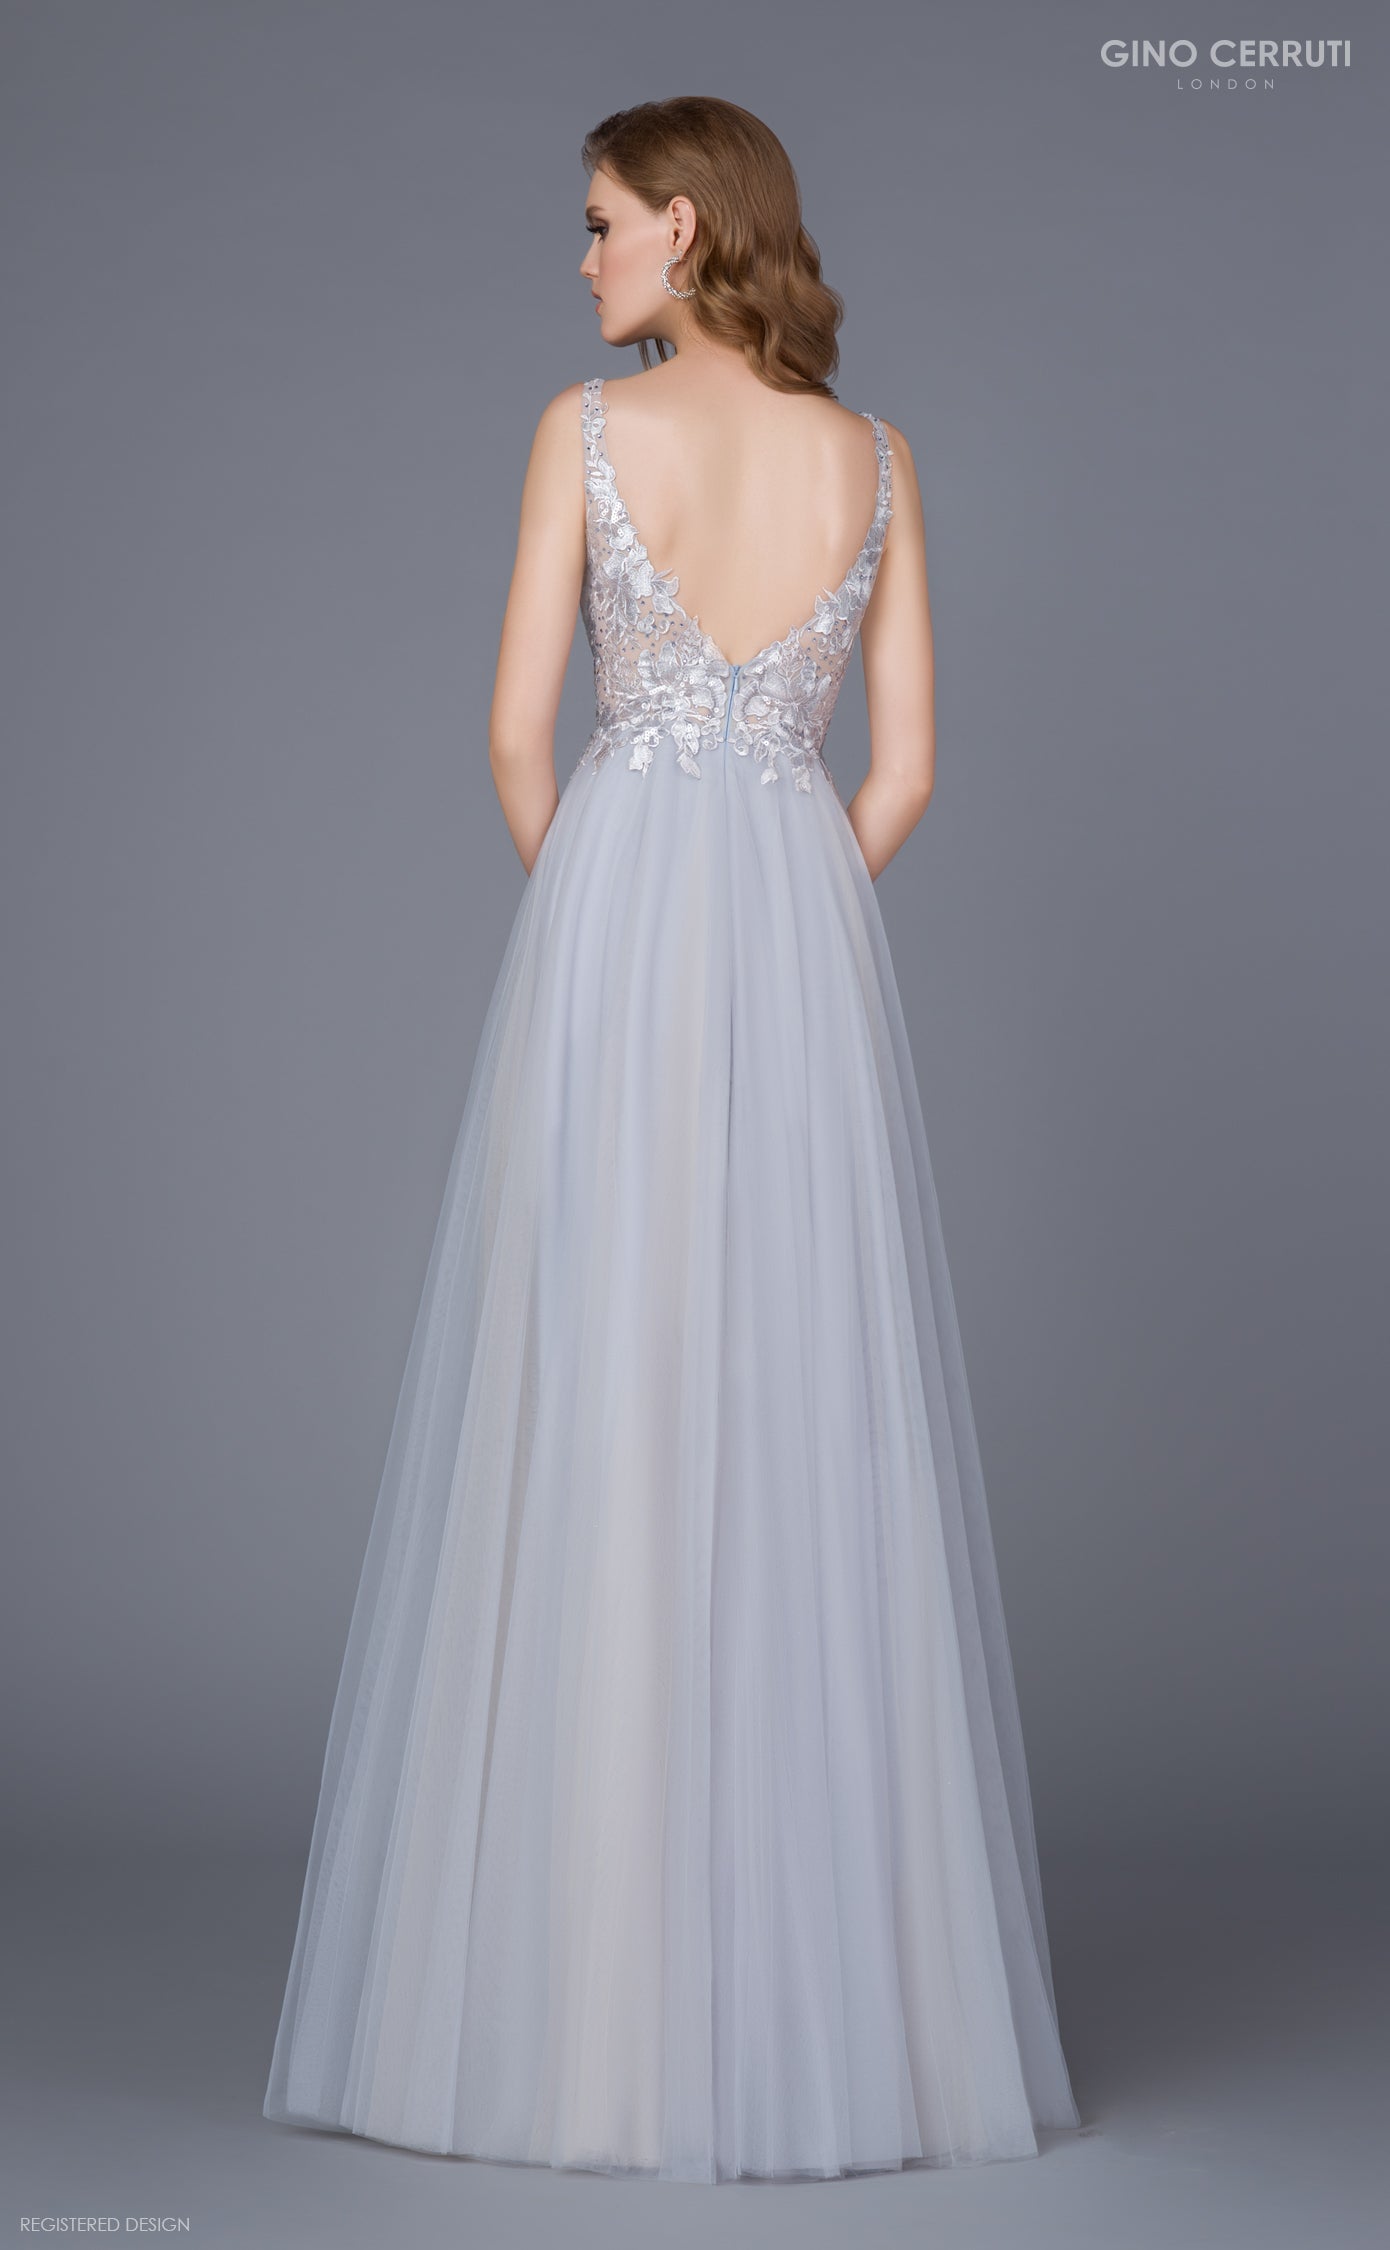 Pale blue prom dress